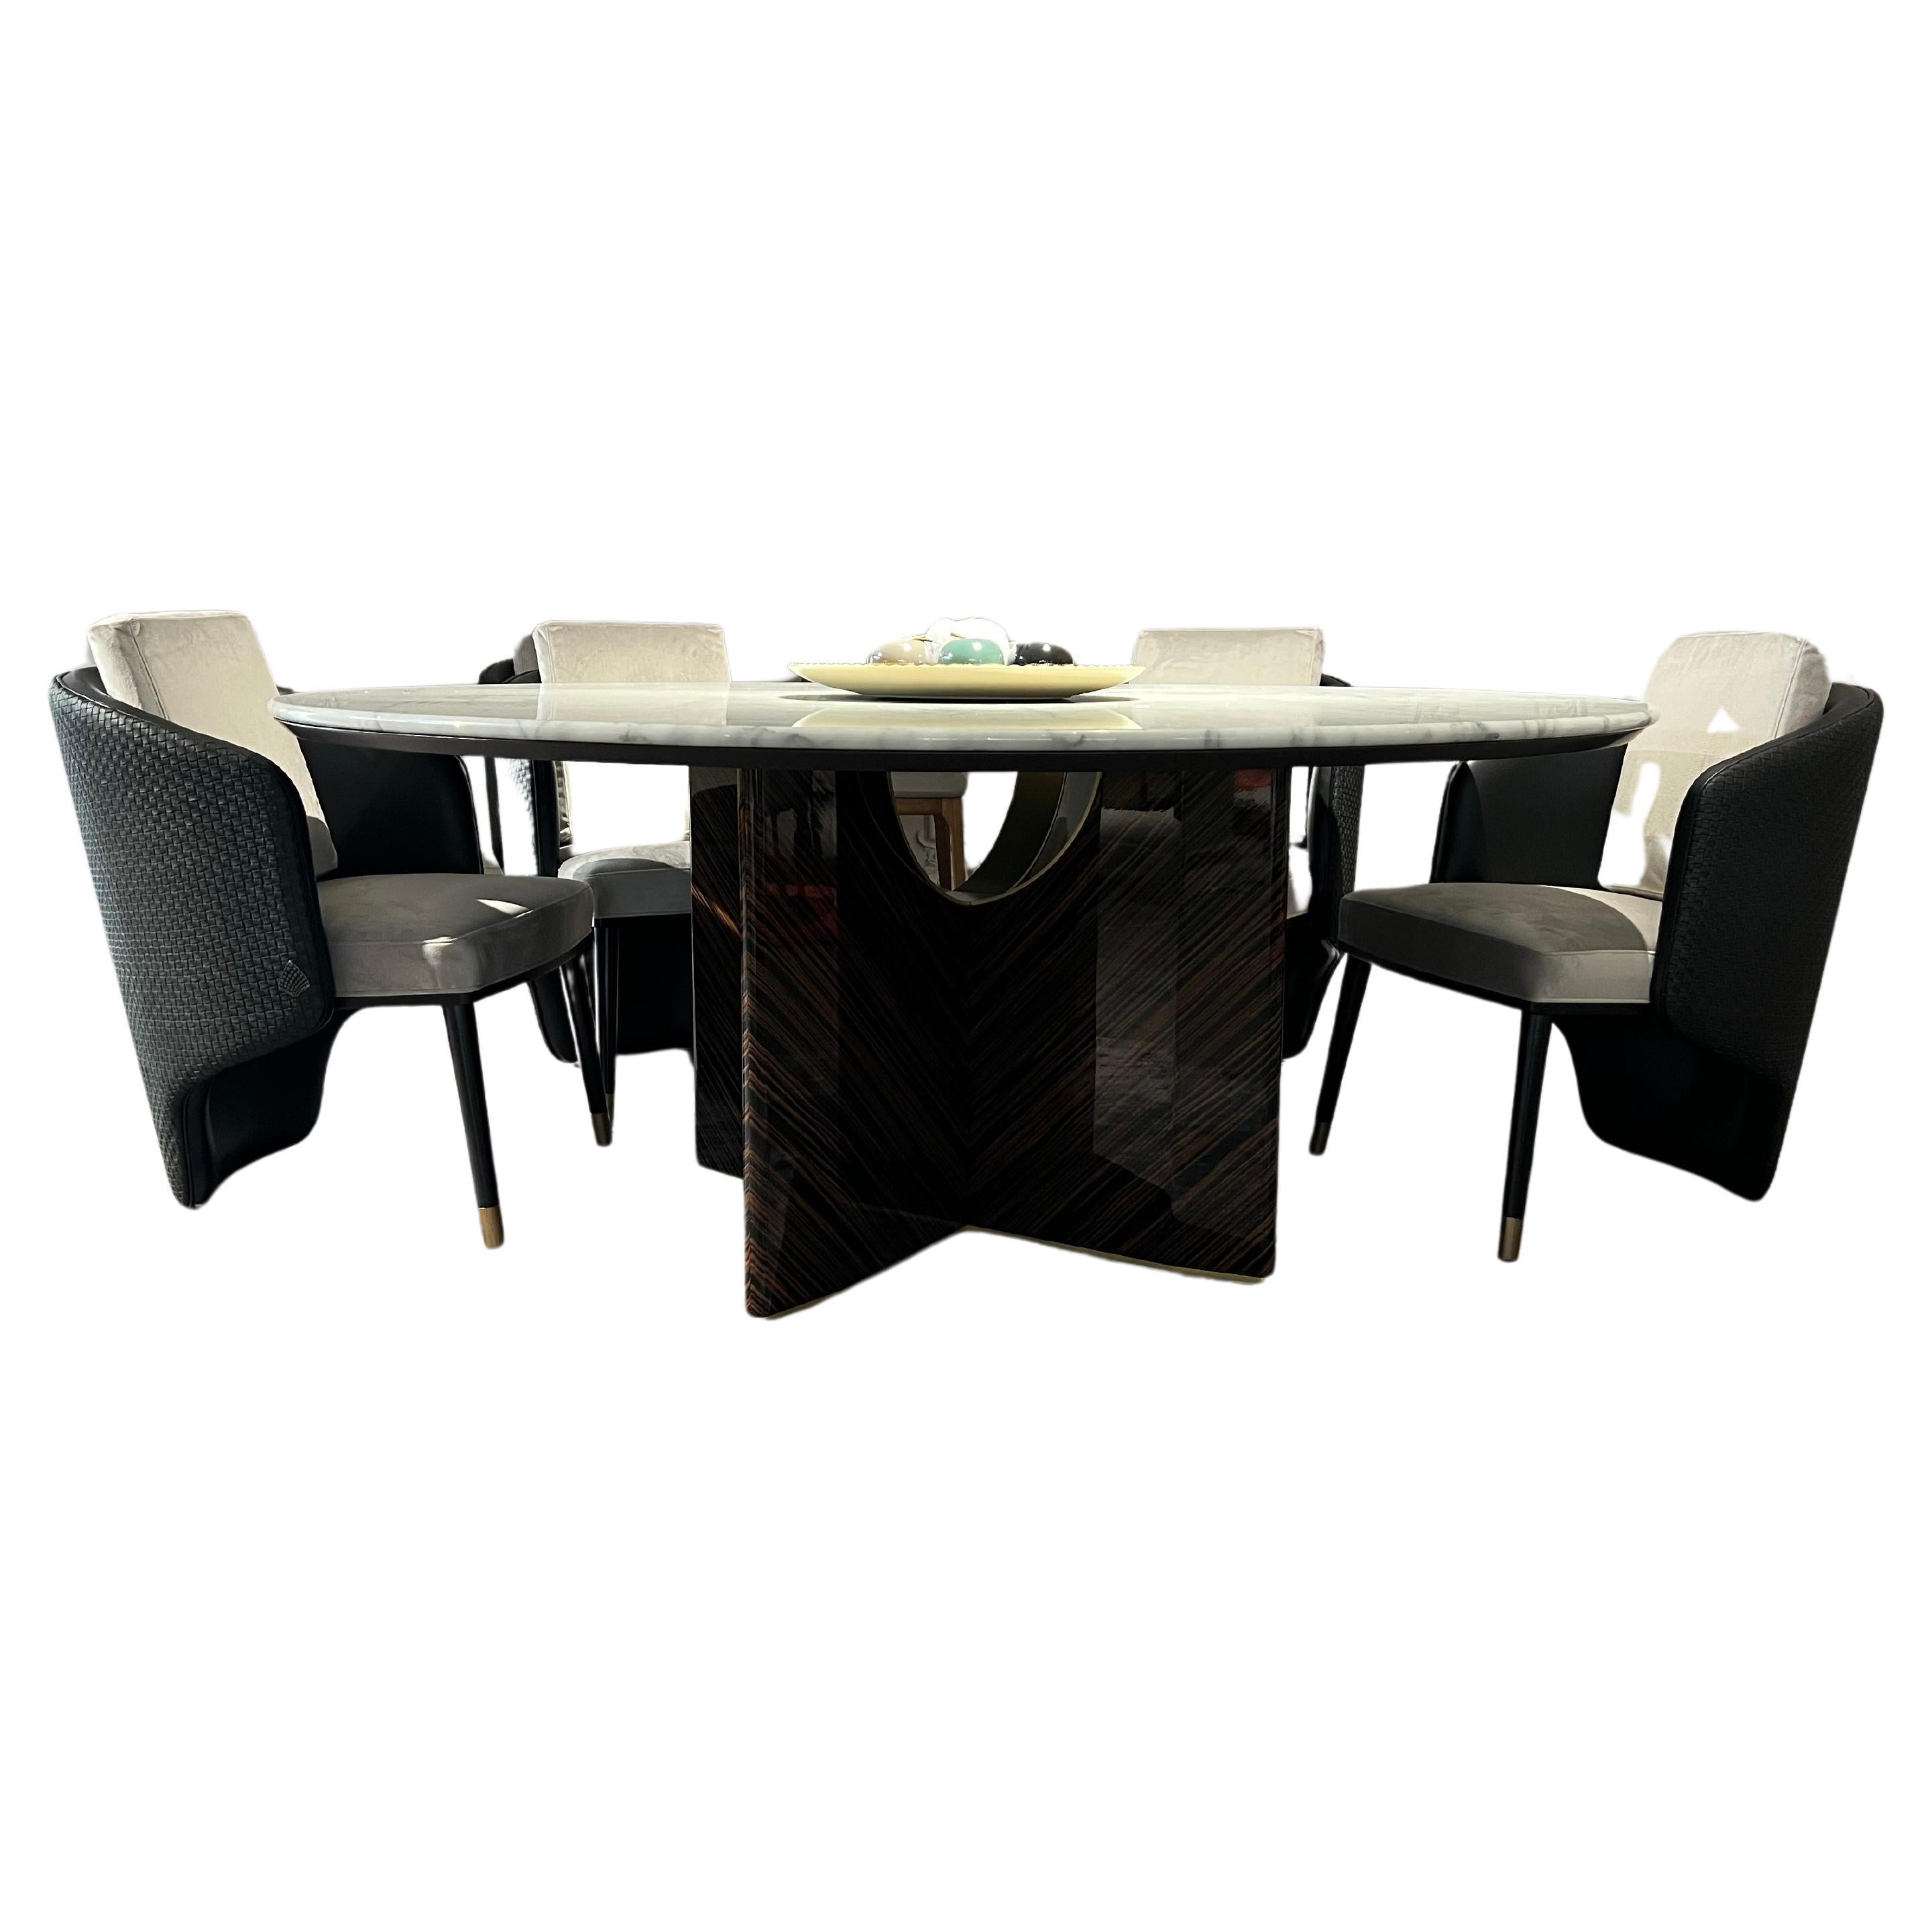 Modo table, with polished Carrara marble top, Ebony Gloss wood base